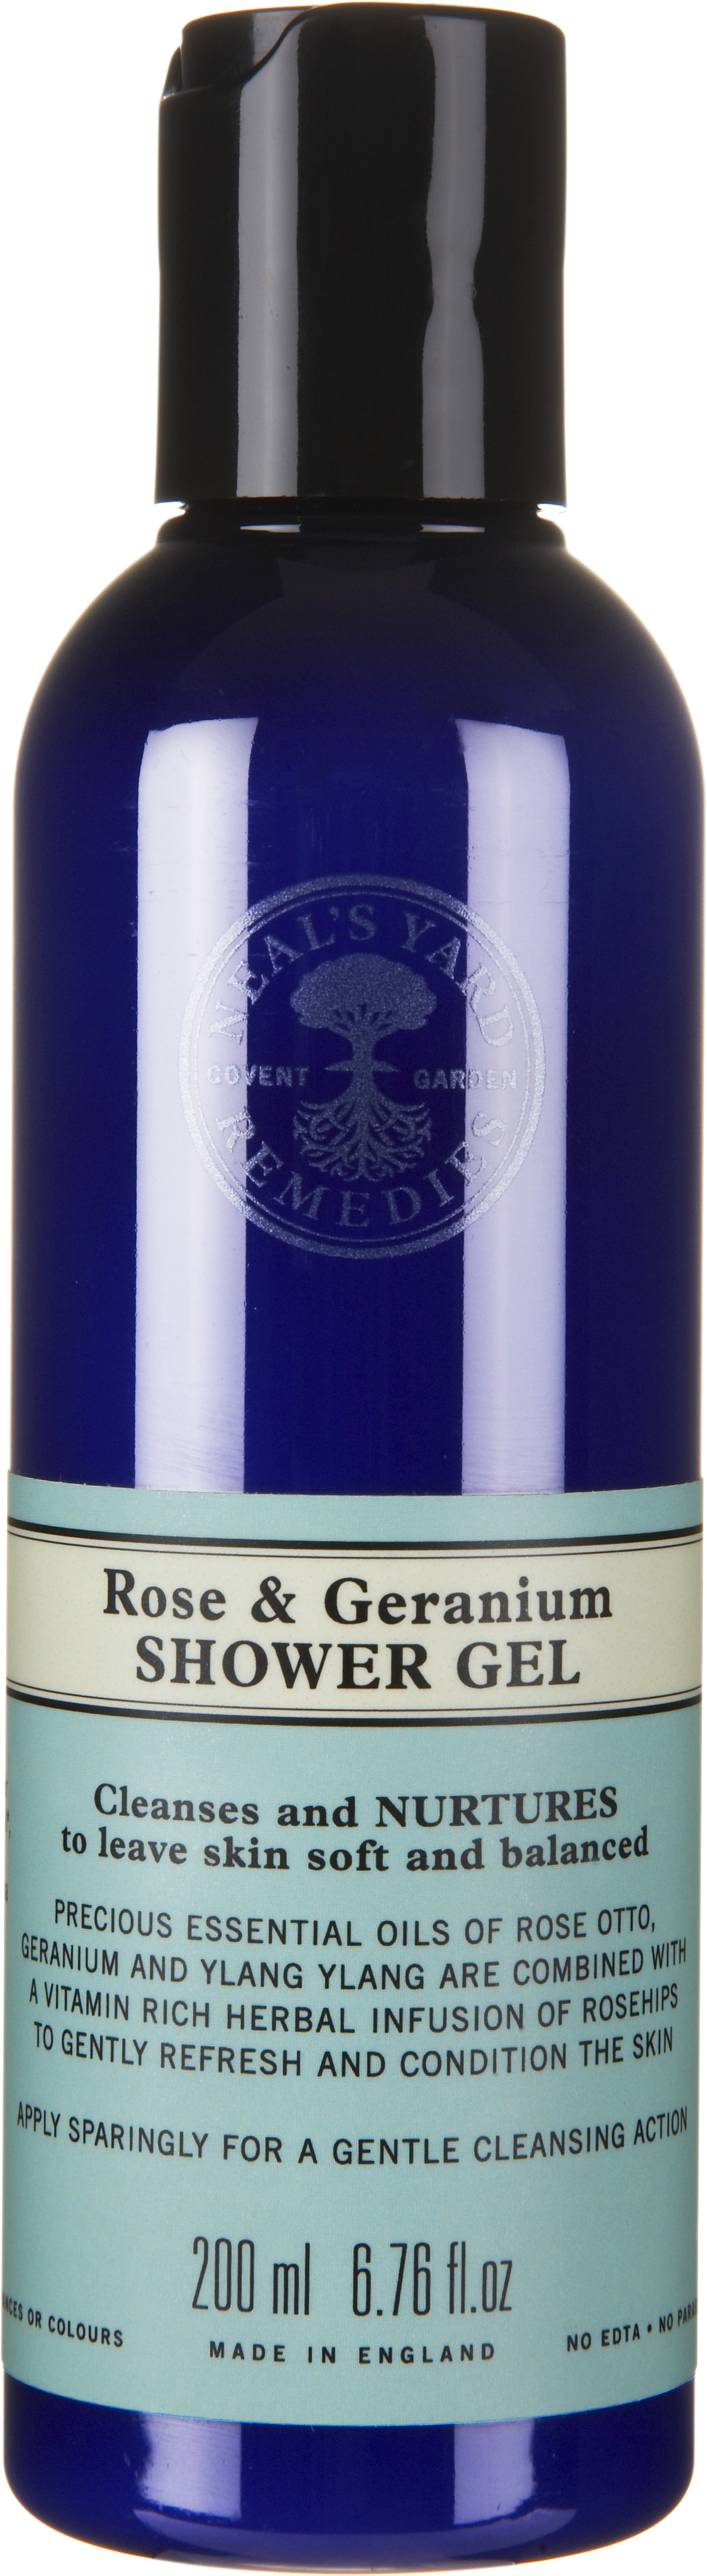 Neal’s Yard Remedies Rose & Geranium Shower Gel 200ml